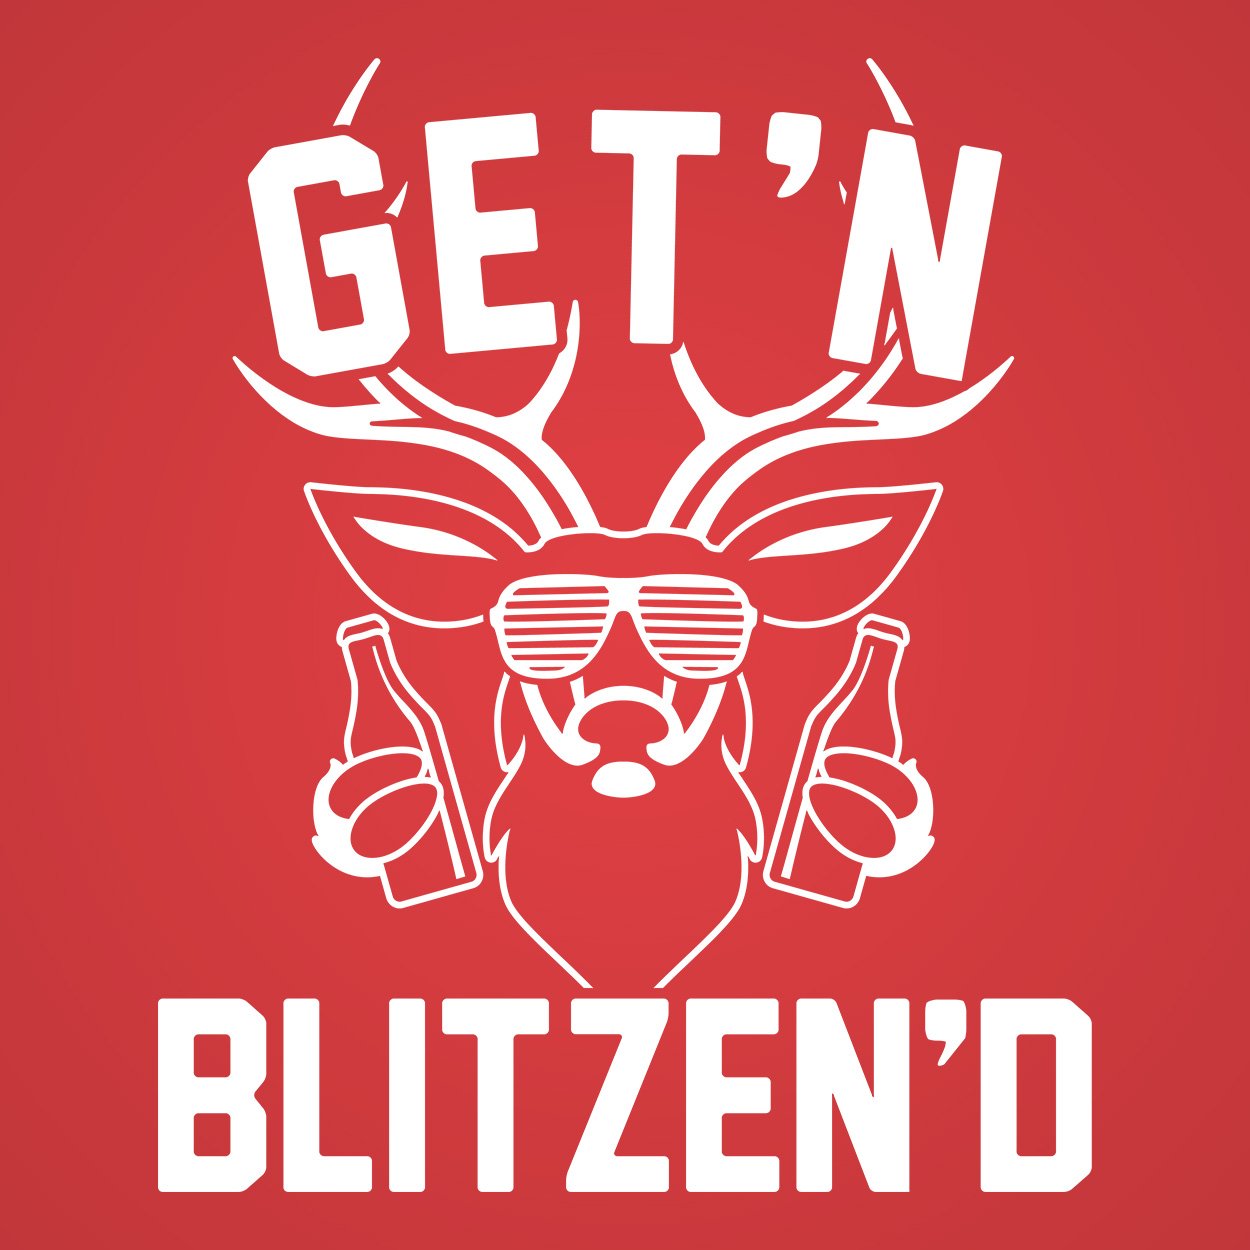 Gettin Blitzened Men's Tri-Blend T-Shirt